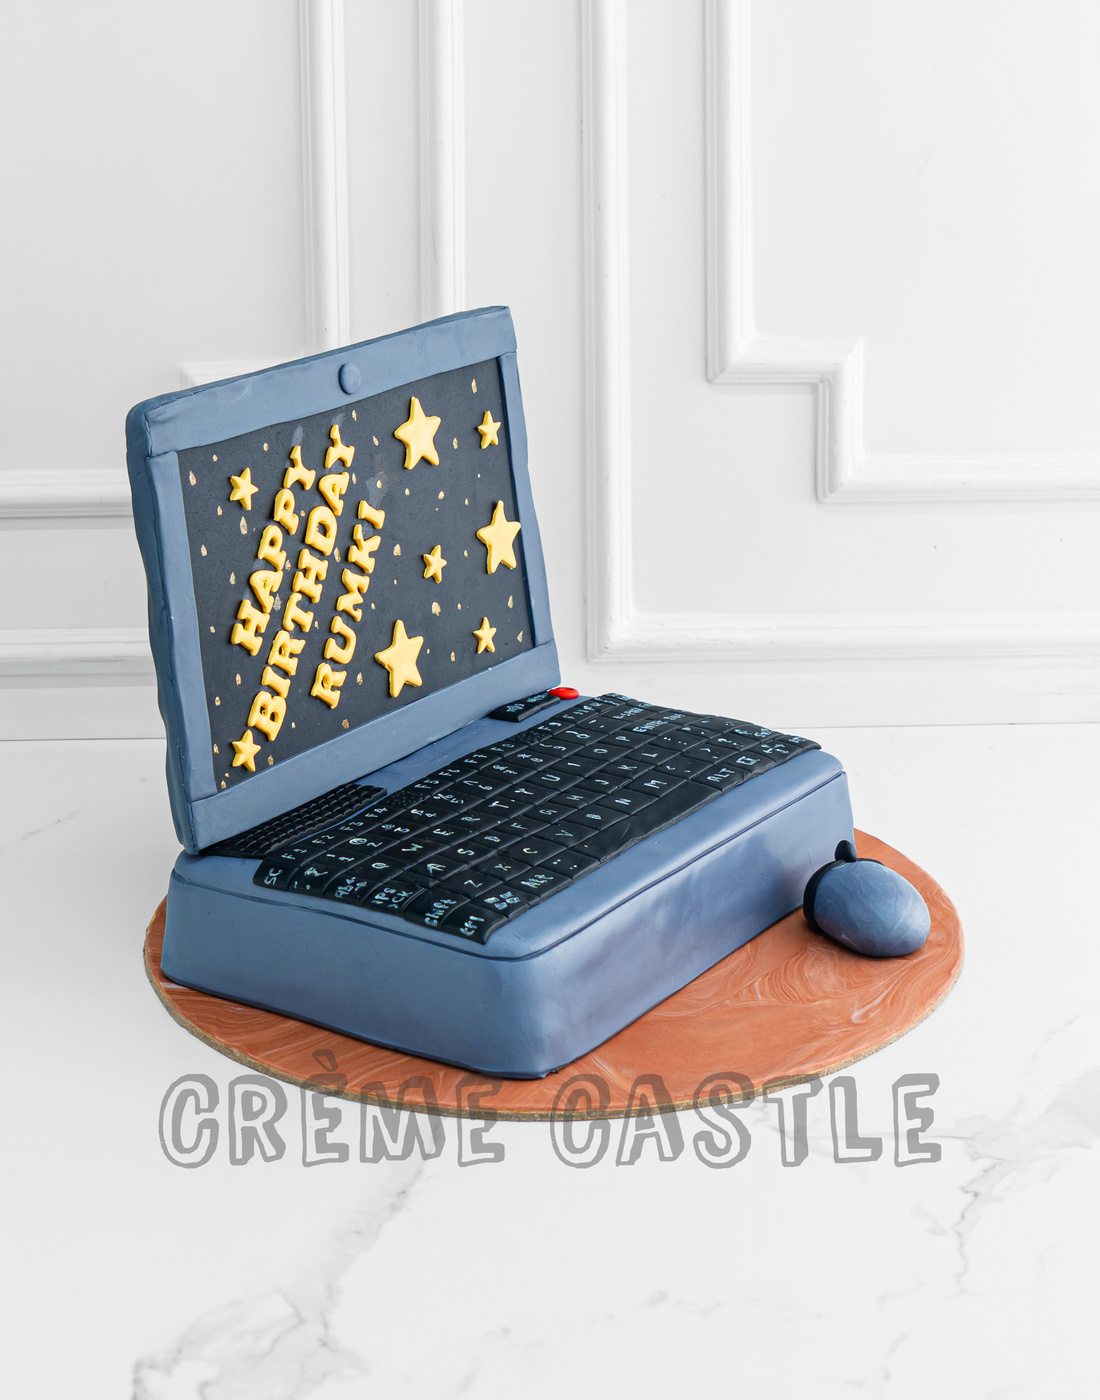 13 Laptop Cake - CakeCentral.com